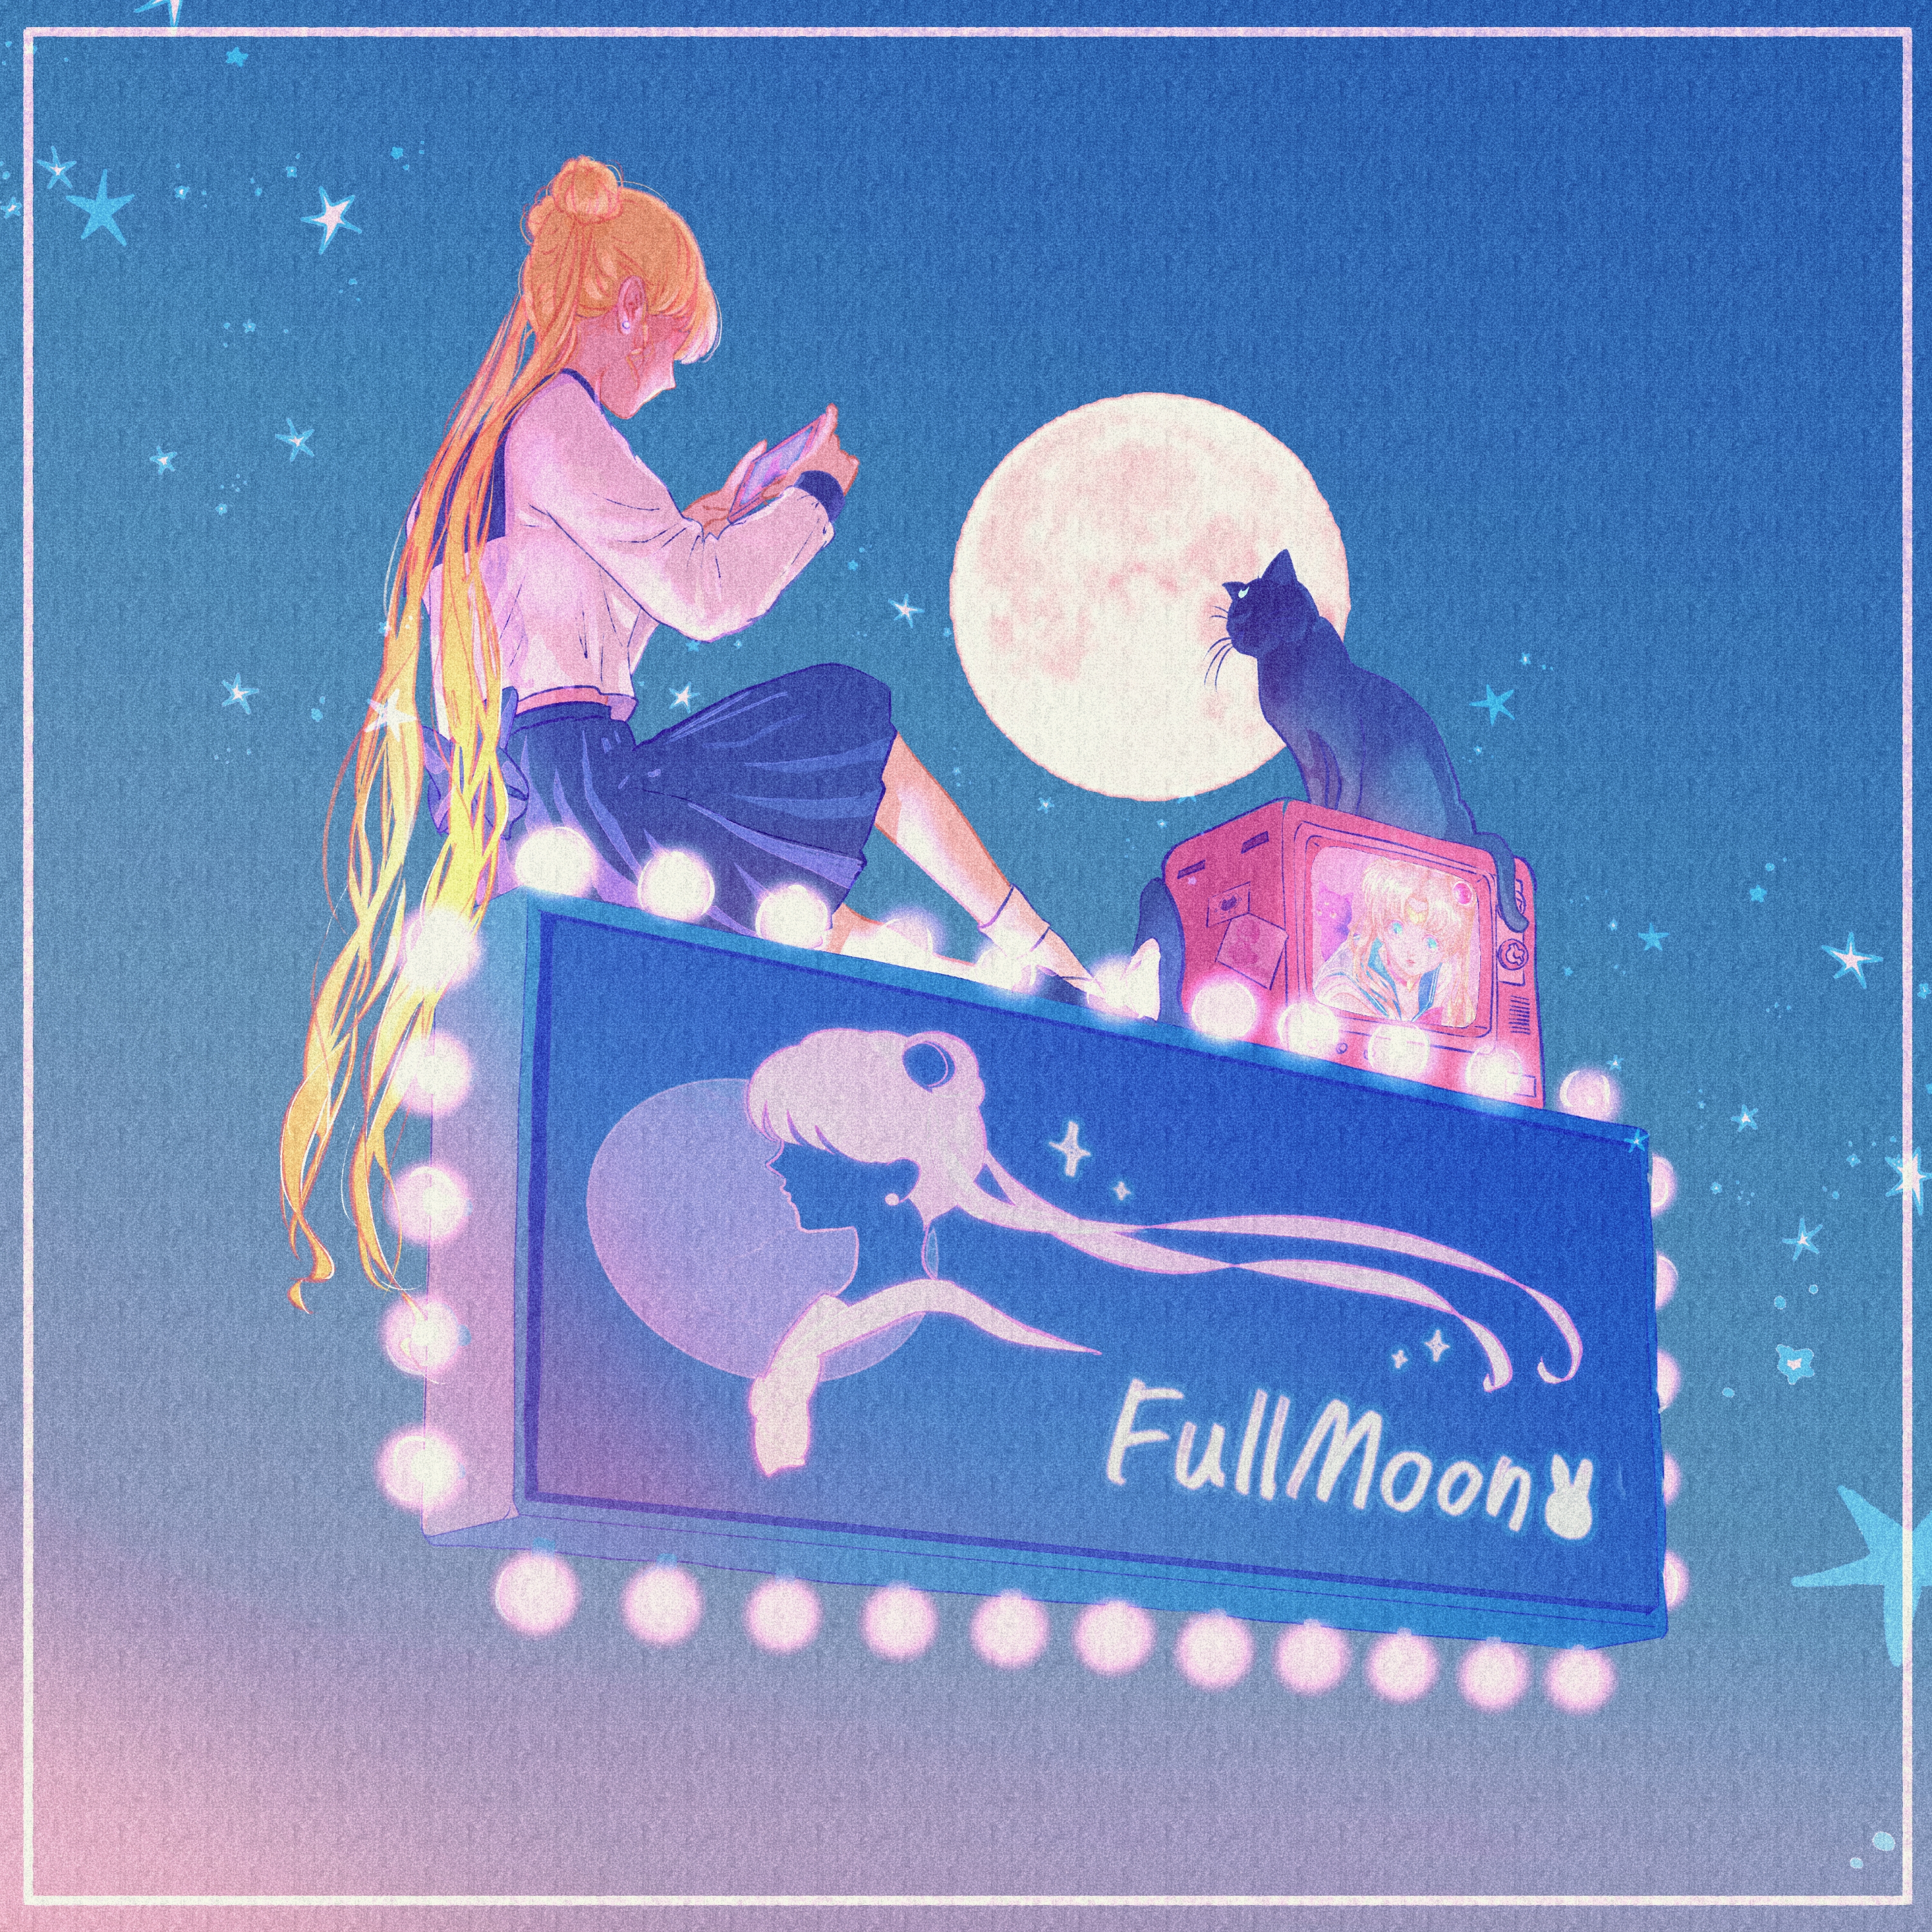 FullMoon插画图片壁纸